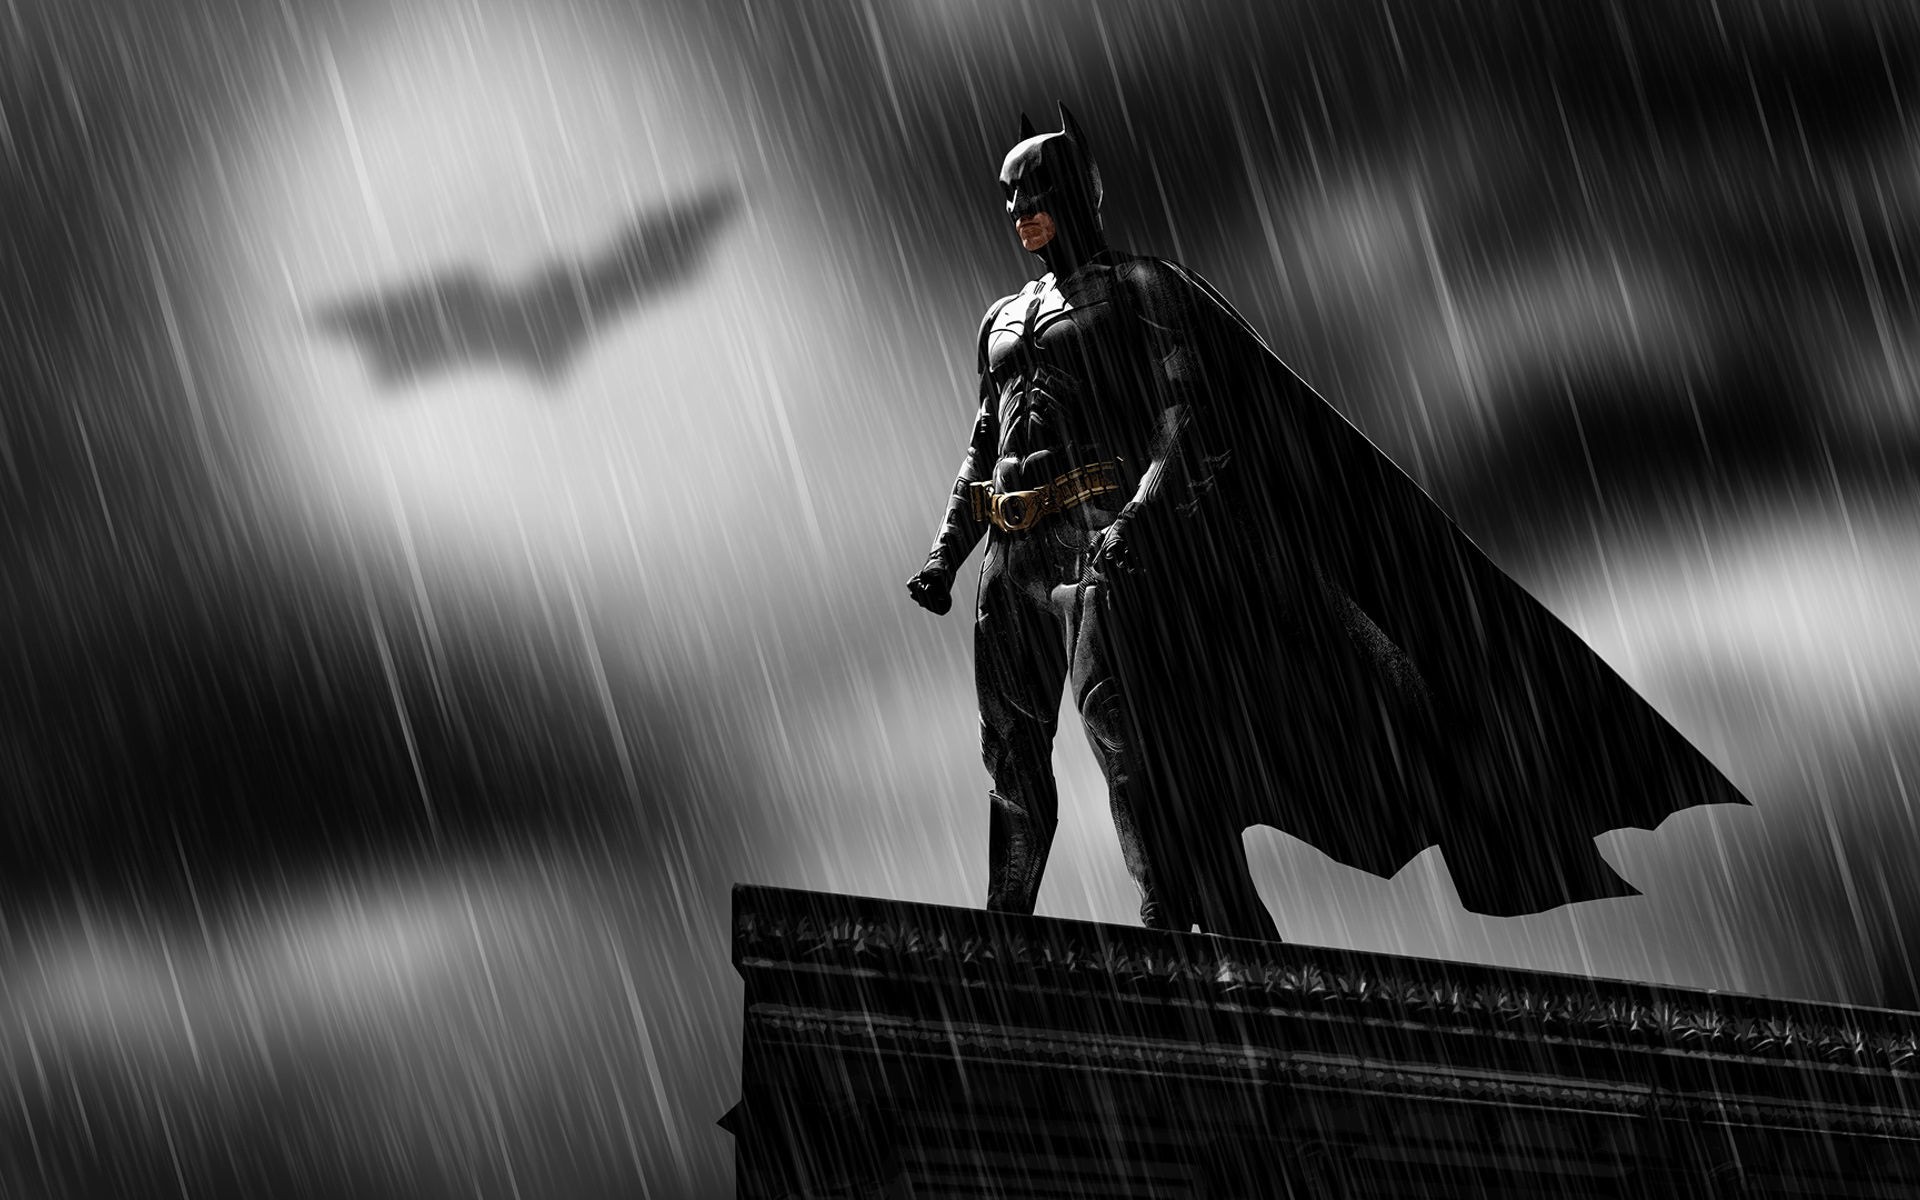 Wallpaper dark rain batman movies superhero cape dc ics ics light weather photograph darkness black and white monochrome photography film noir x